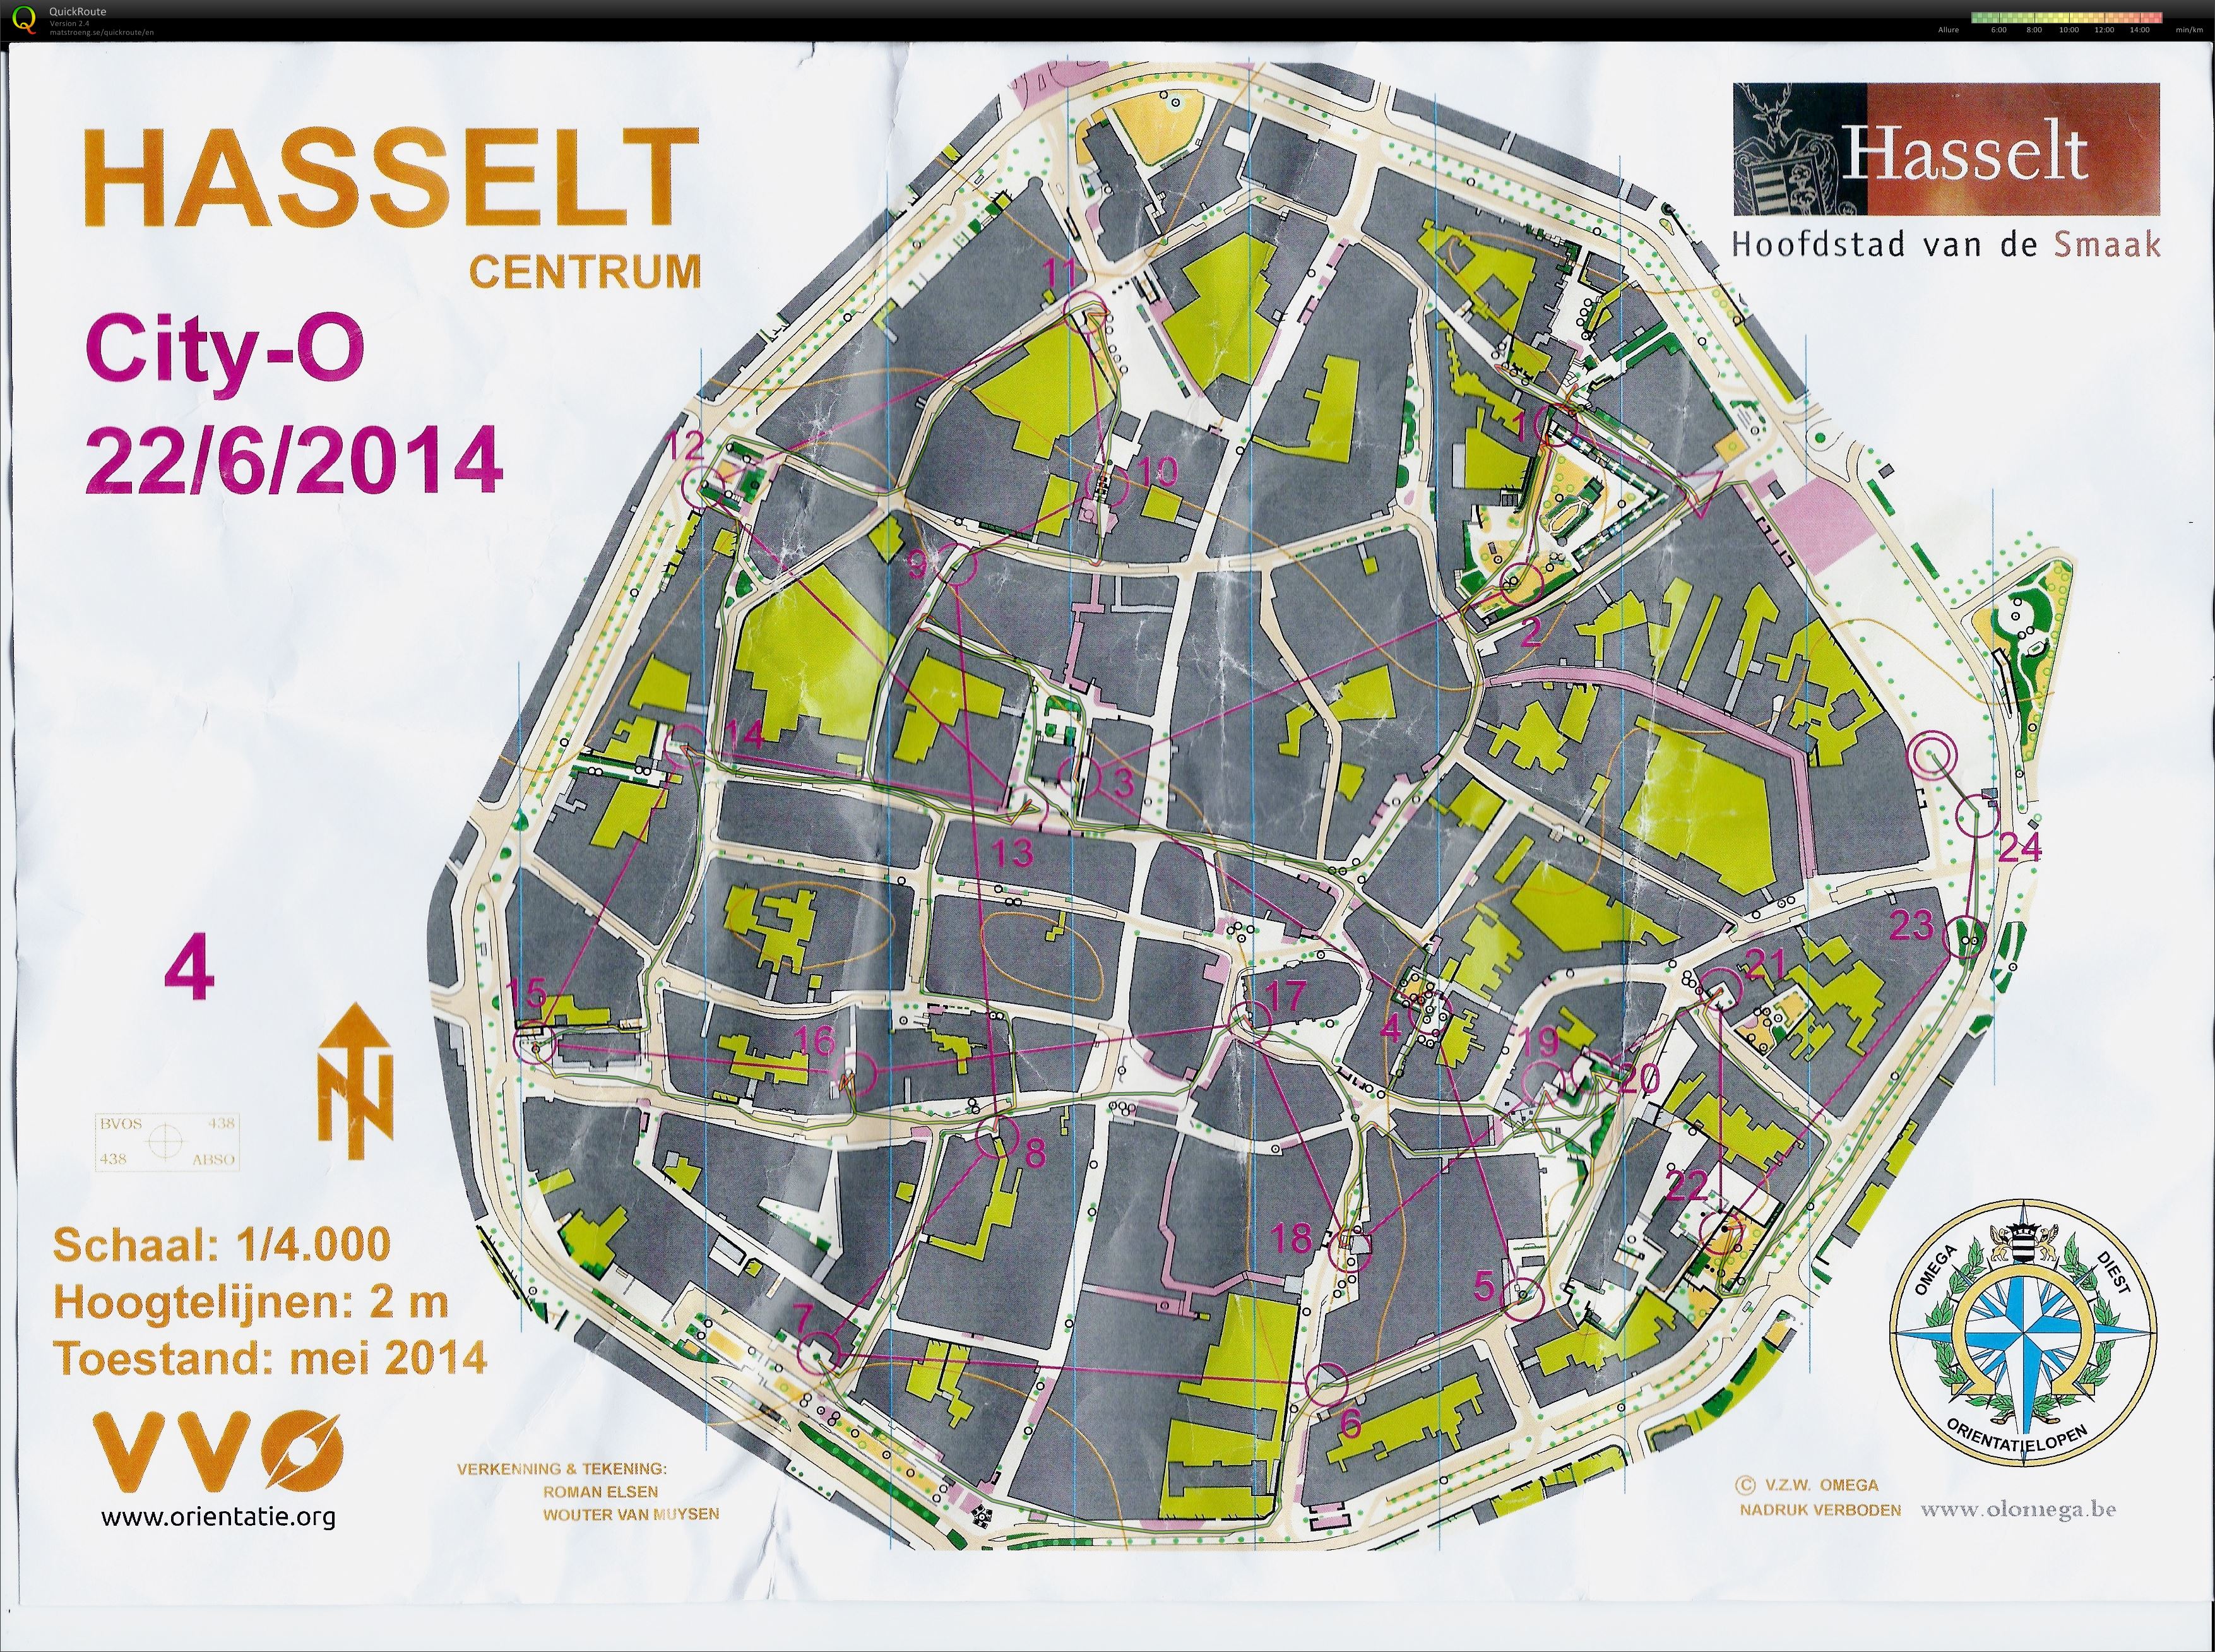 Hasselt centrum (2014-06-22)